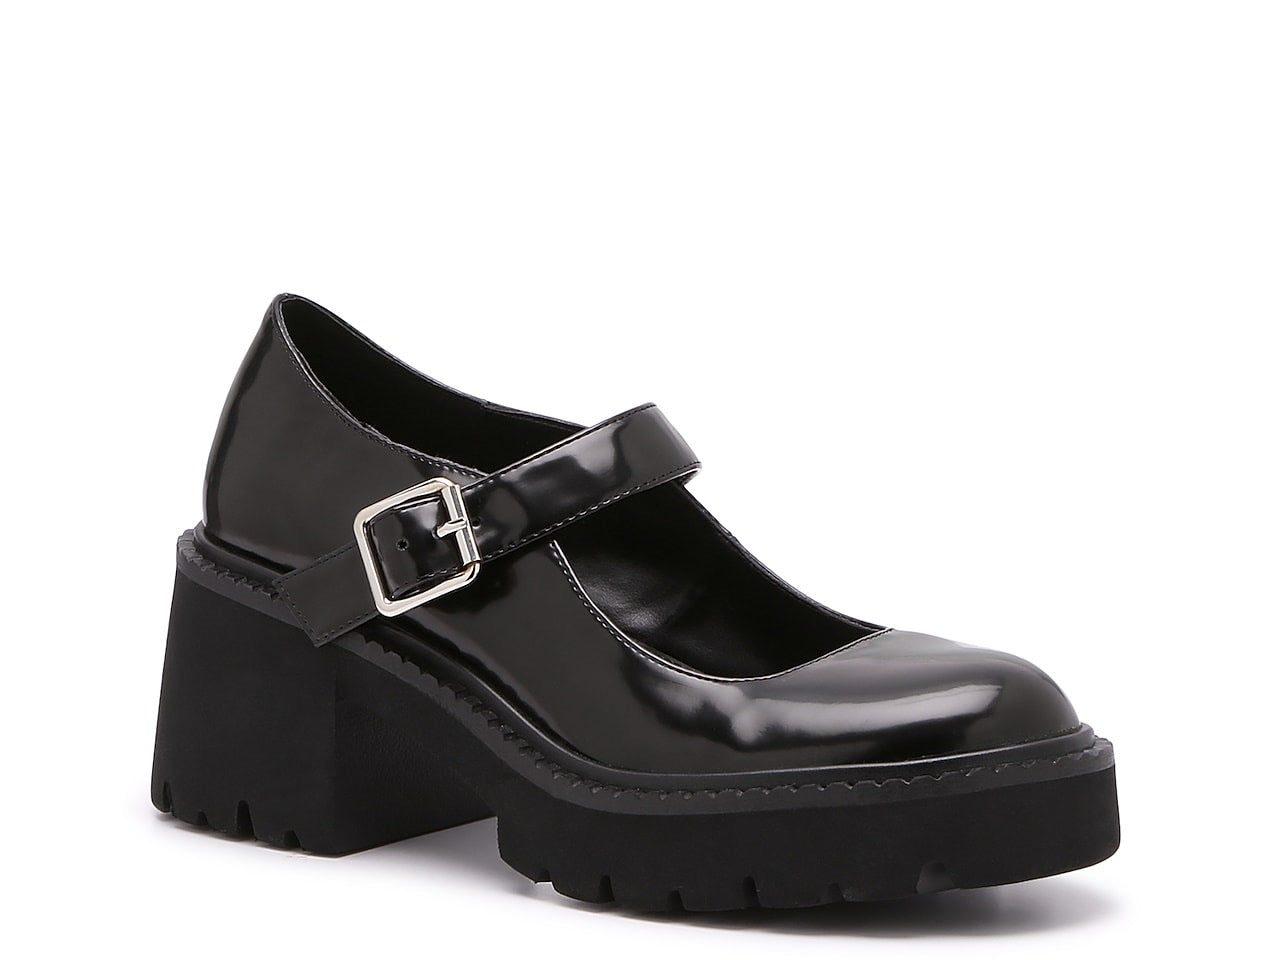 Steve Madden - Abbreviate Black Platform Mary Jane Shoes